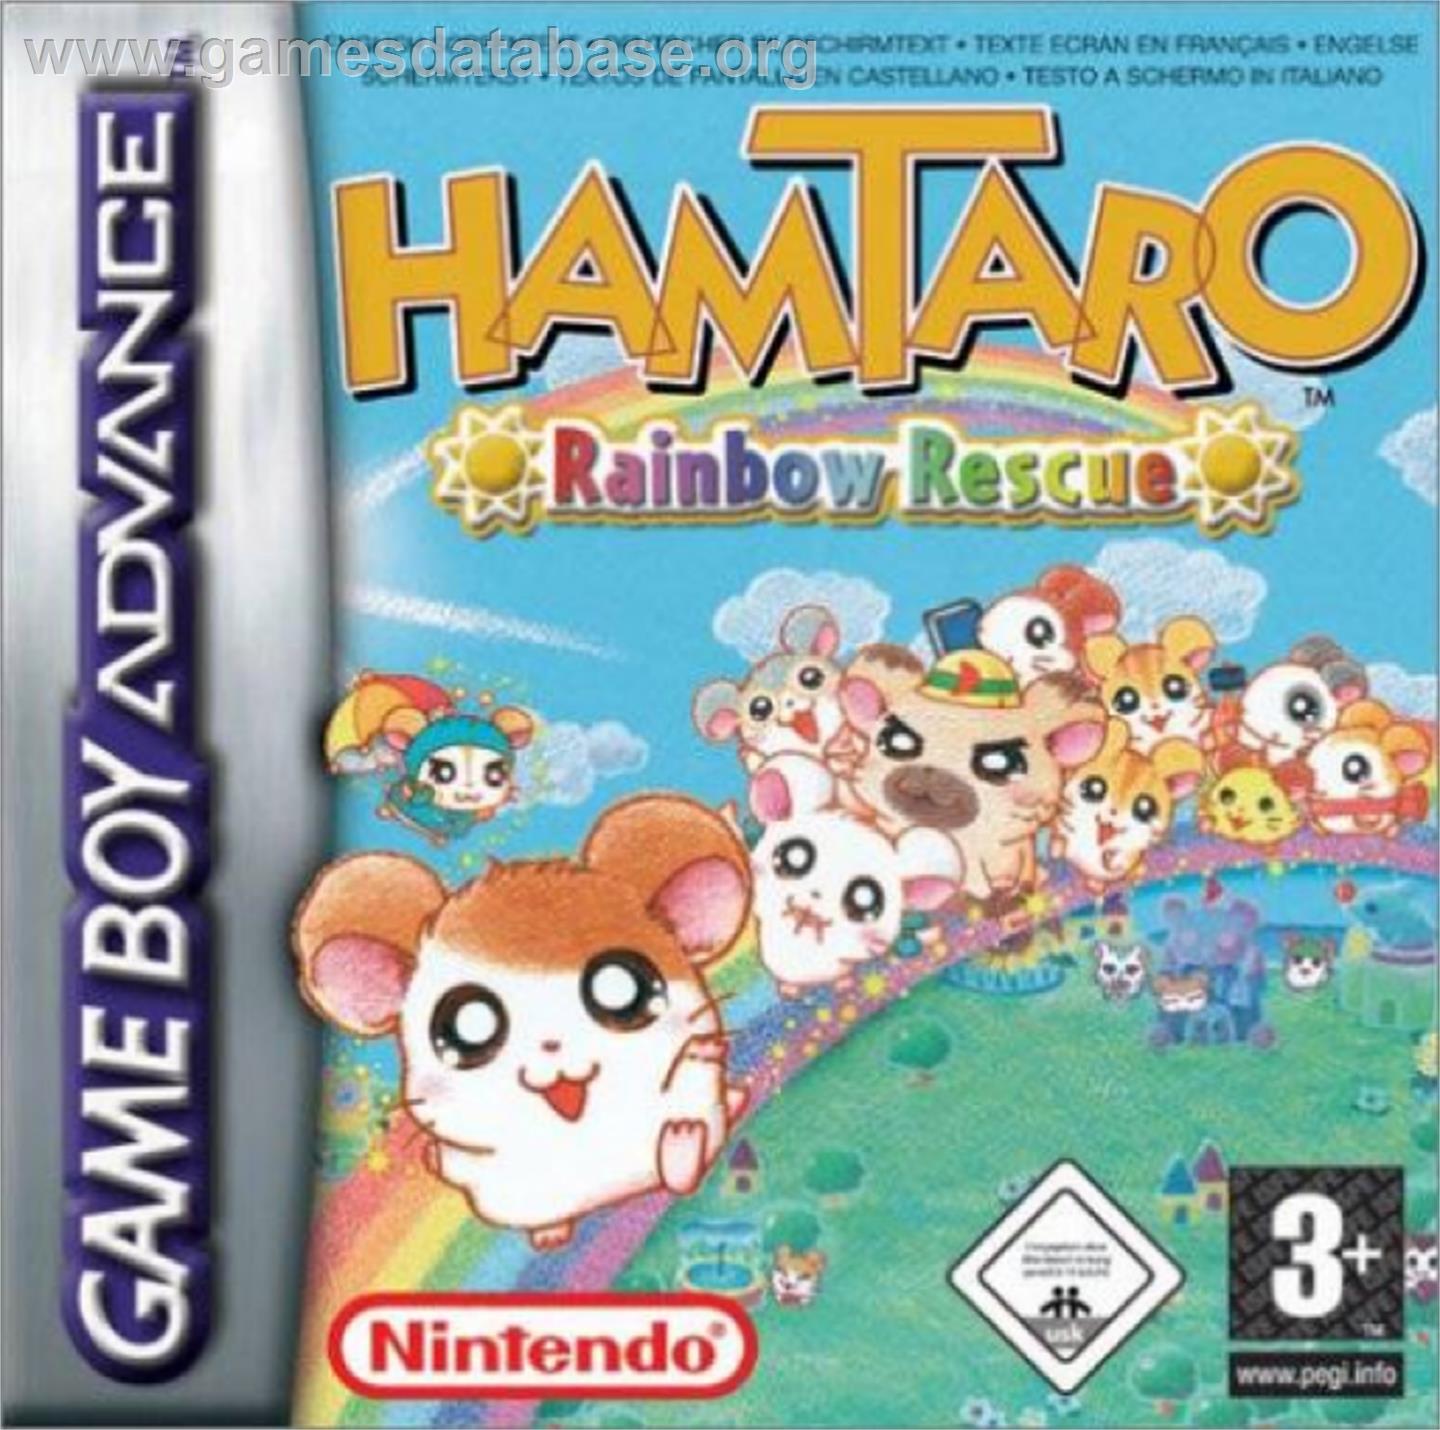 Hamtaro Rainbow Rescue - Nintendo Game Boy Advance - Artwork - Box